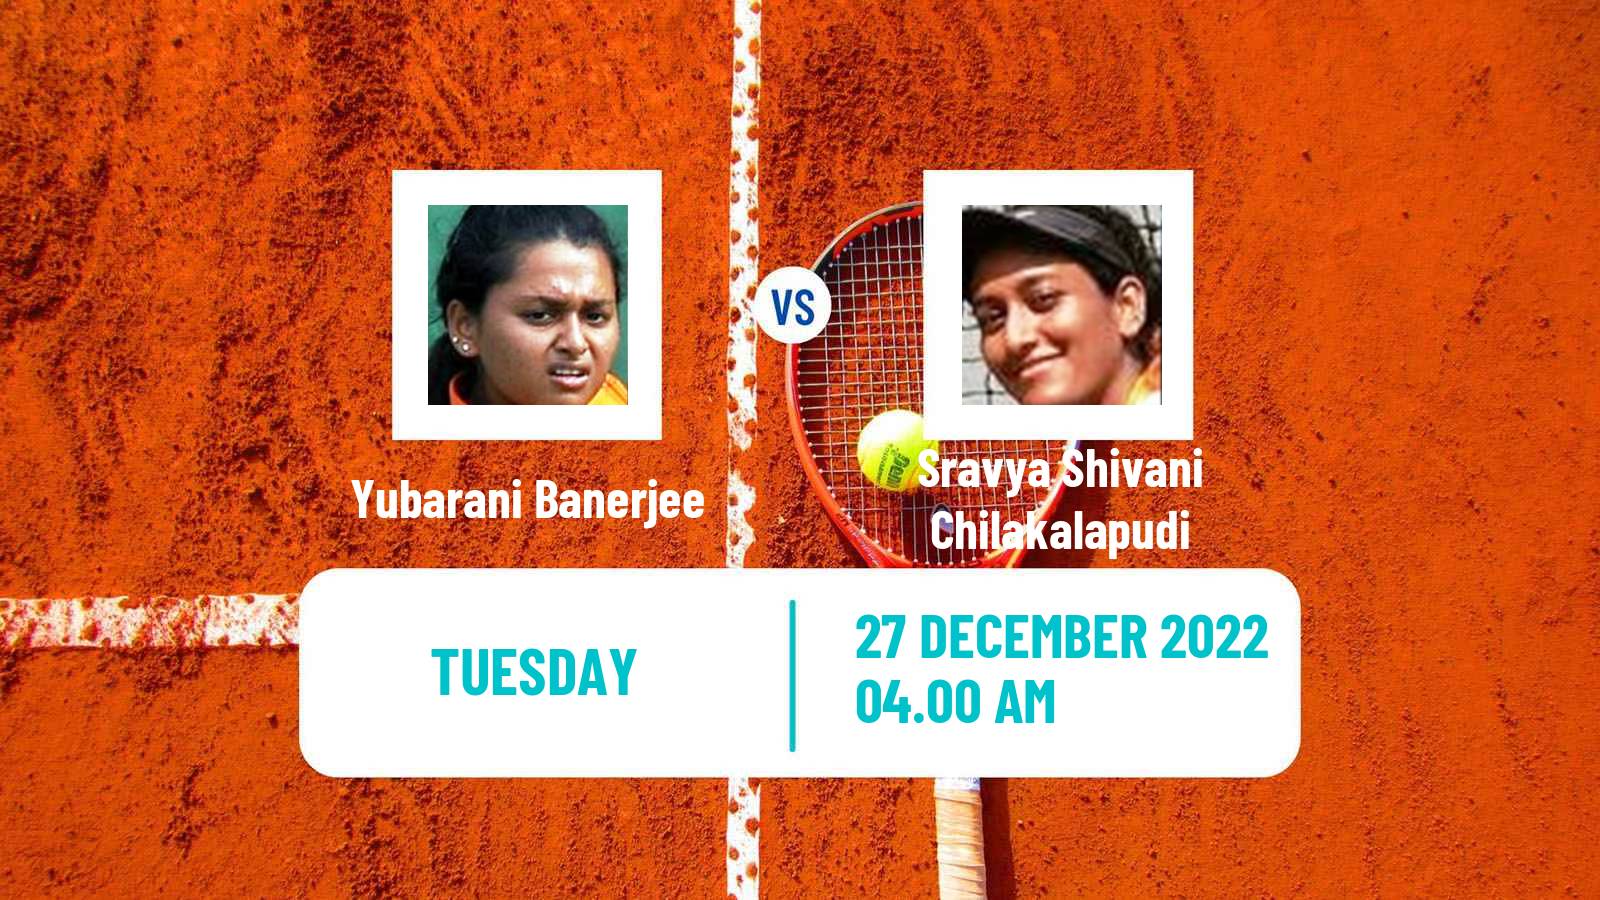 Tennis ITF Tournaments Yubarani Banerjee - Sravya Shivani Chilakalapudi